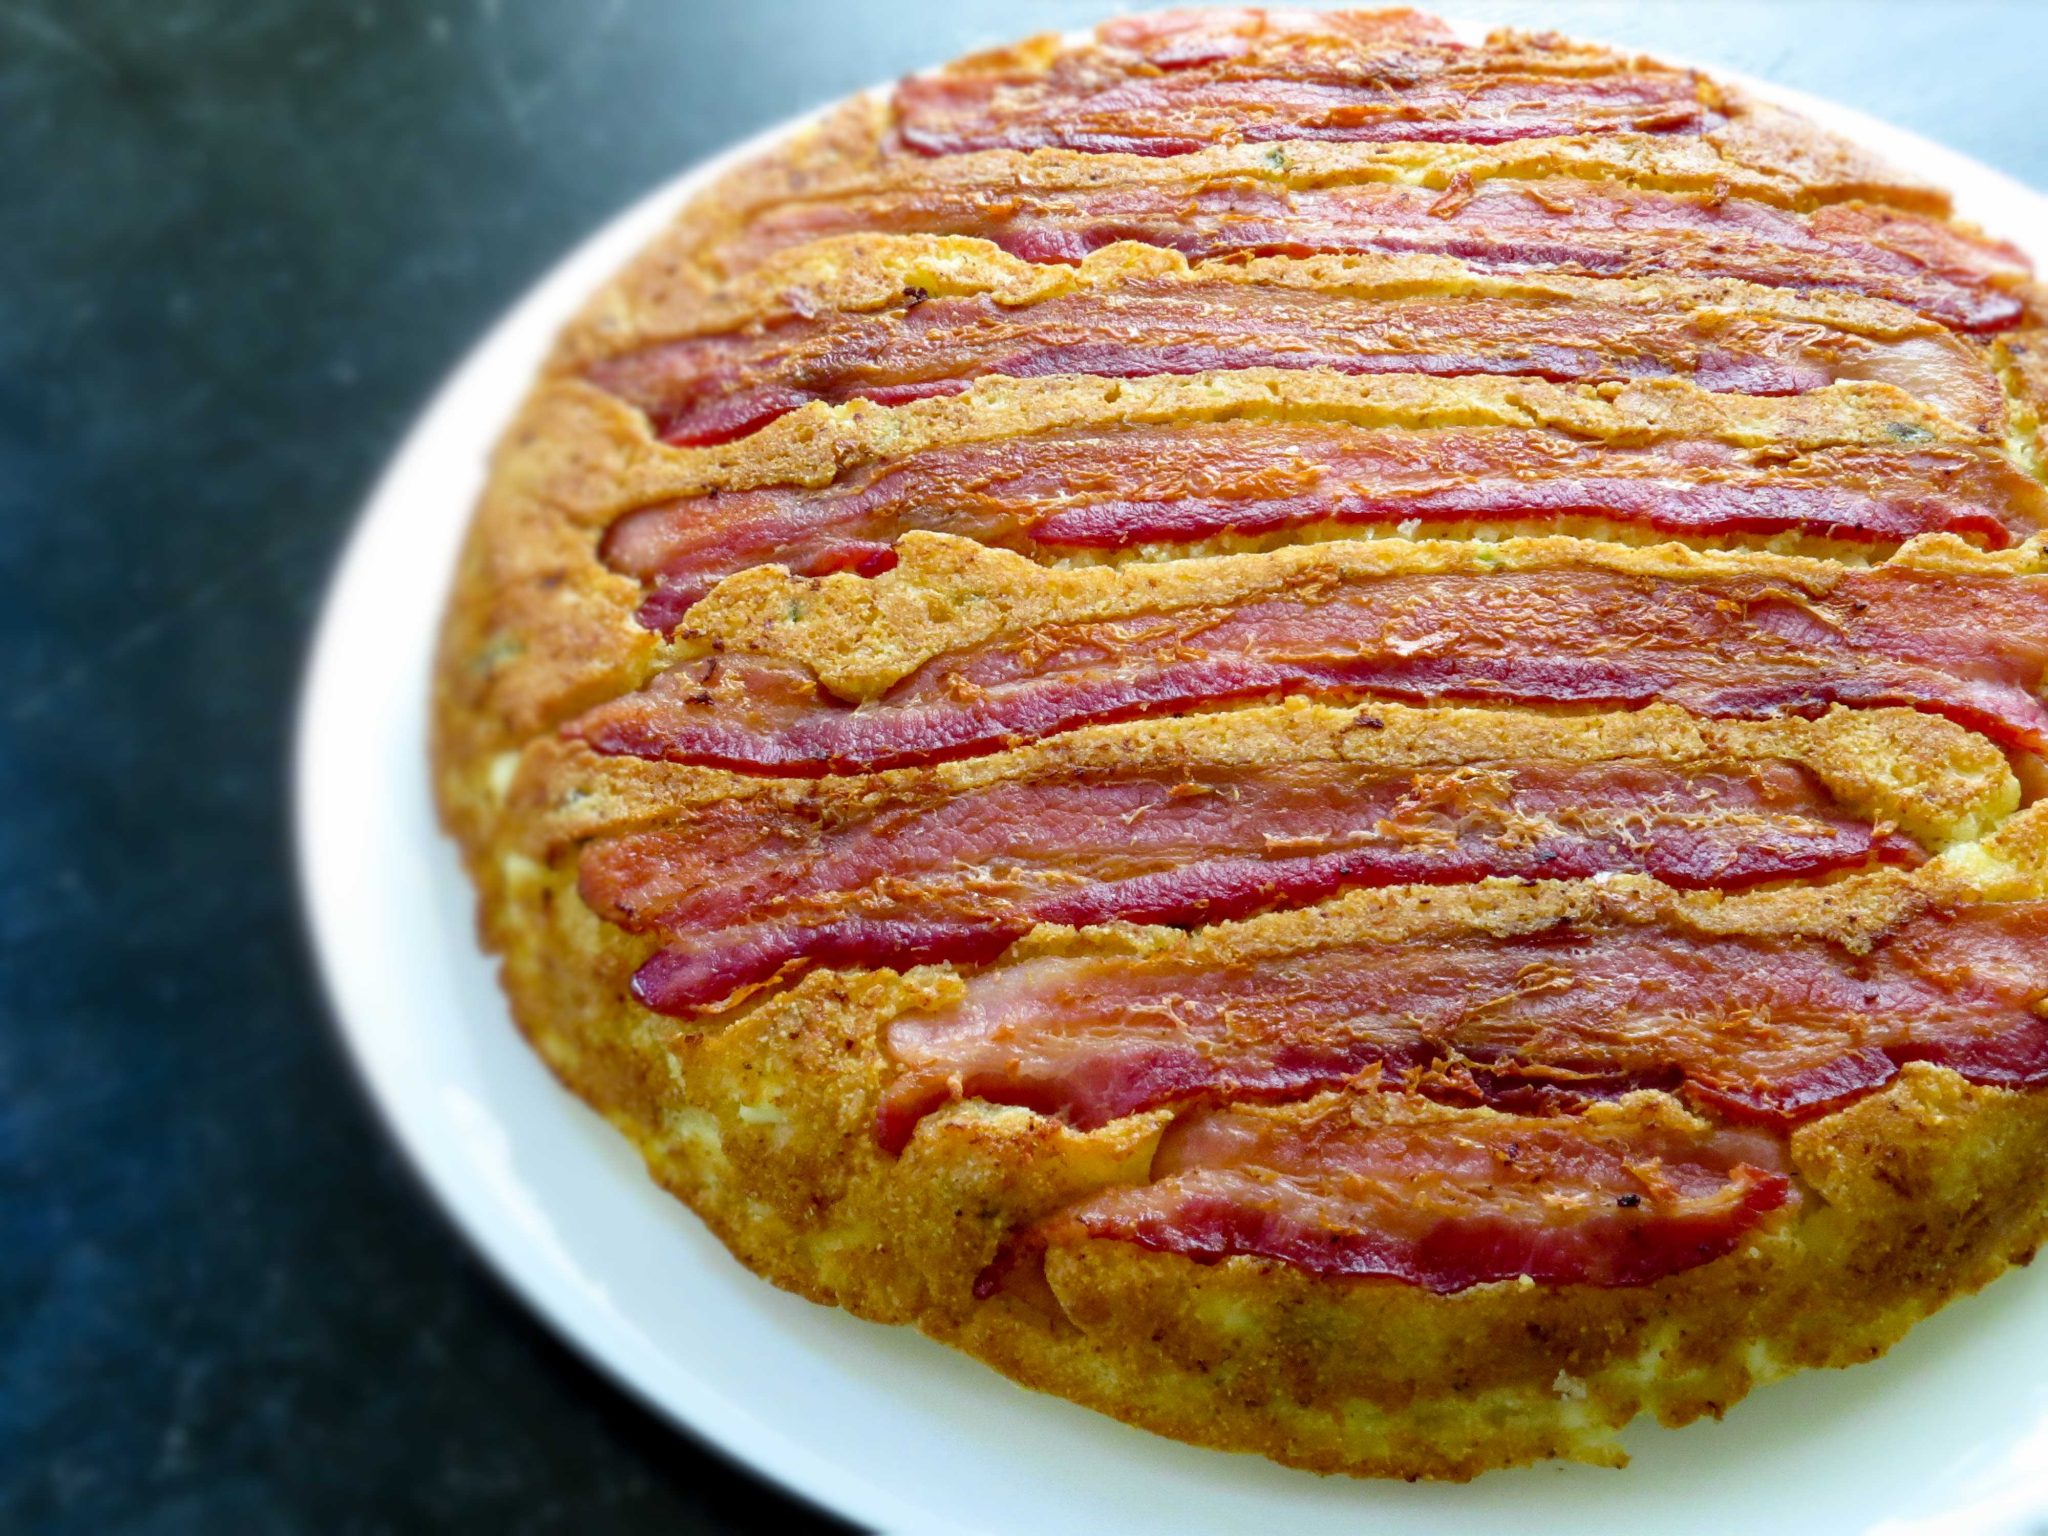 http://sweetsavant.com/wp-content/uploads/2016/02/bacon-cornbread-sm.jpg